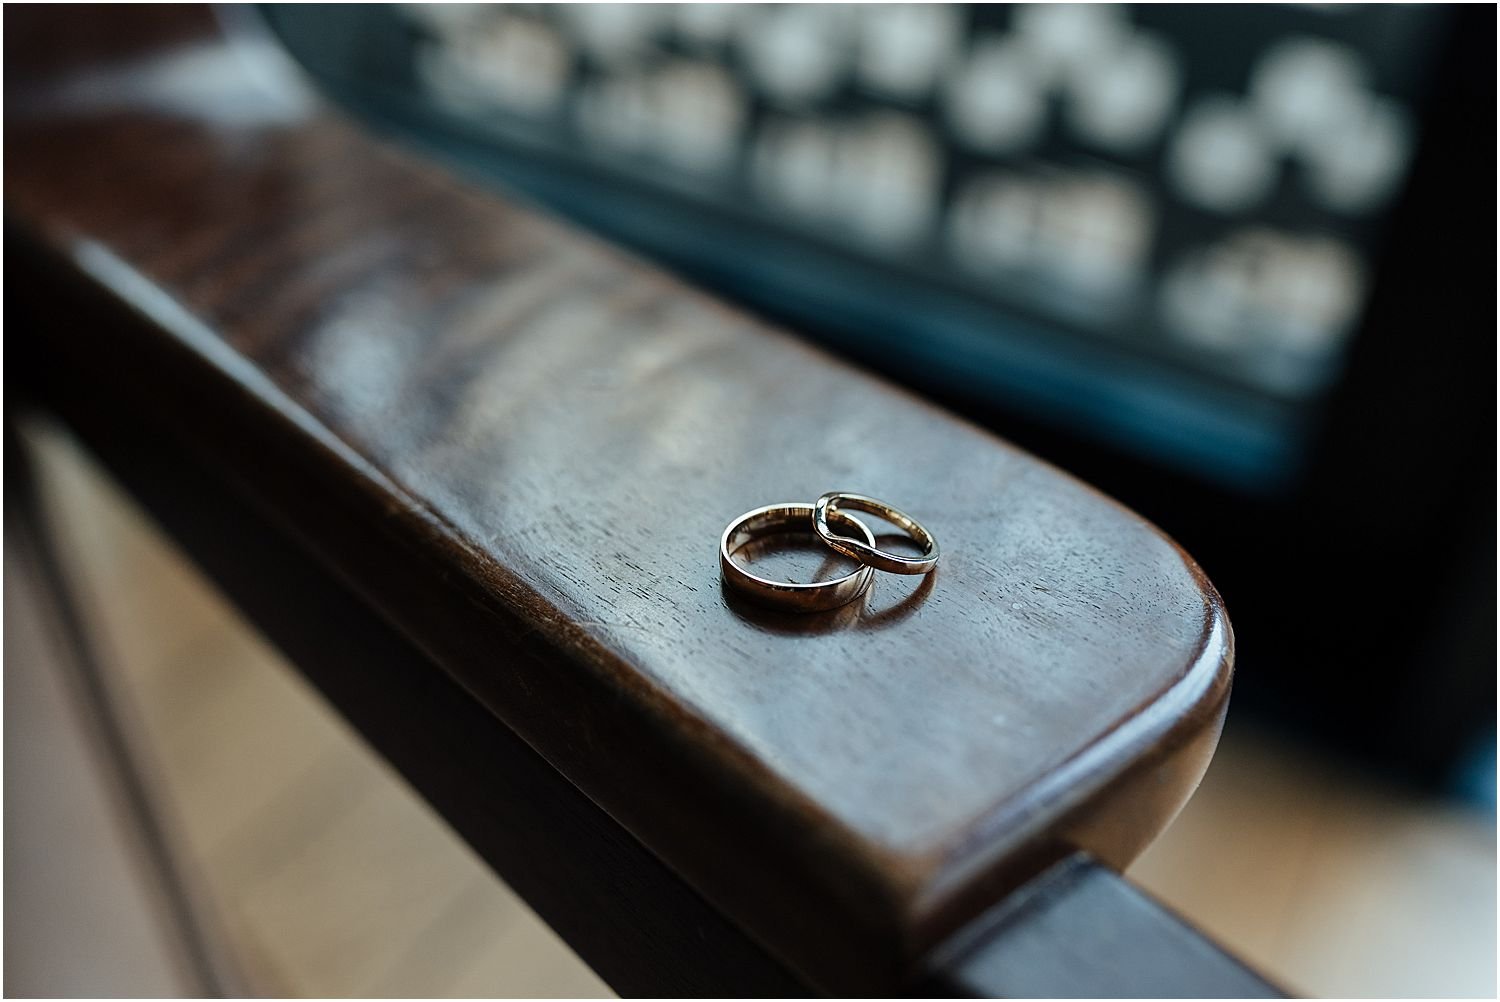 Close up photo of wedding rings